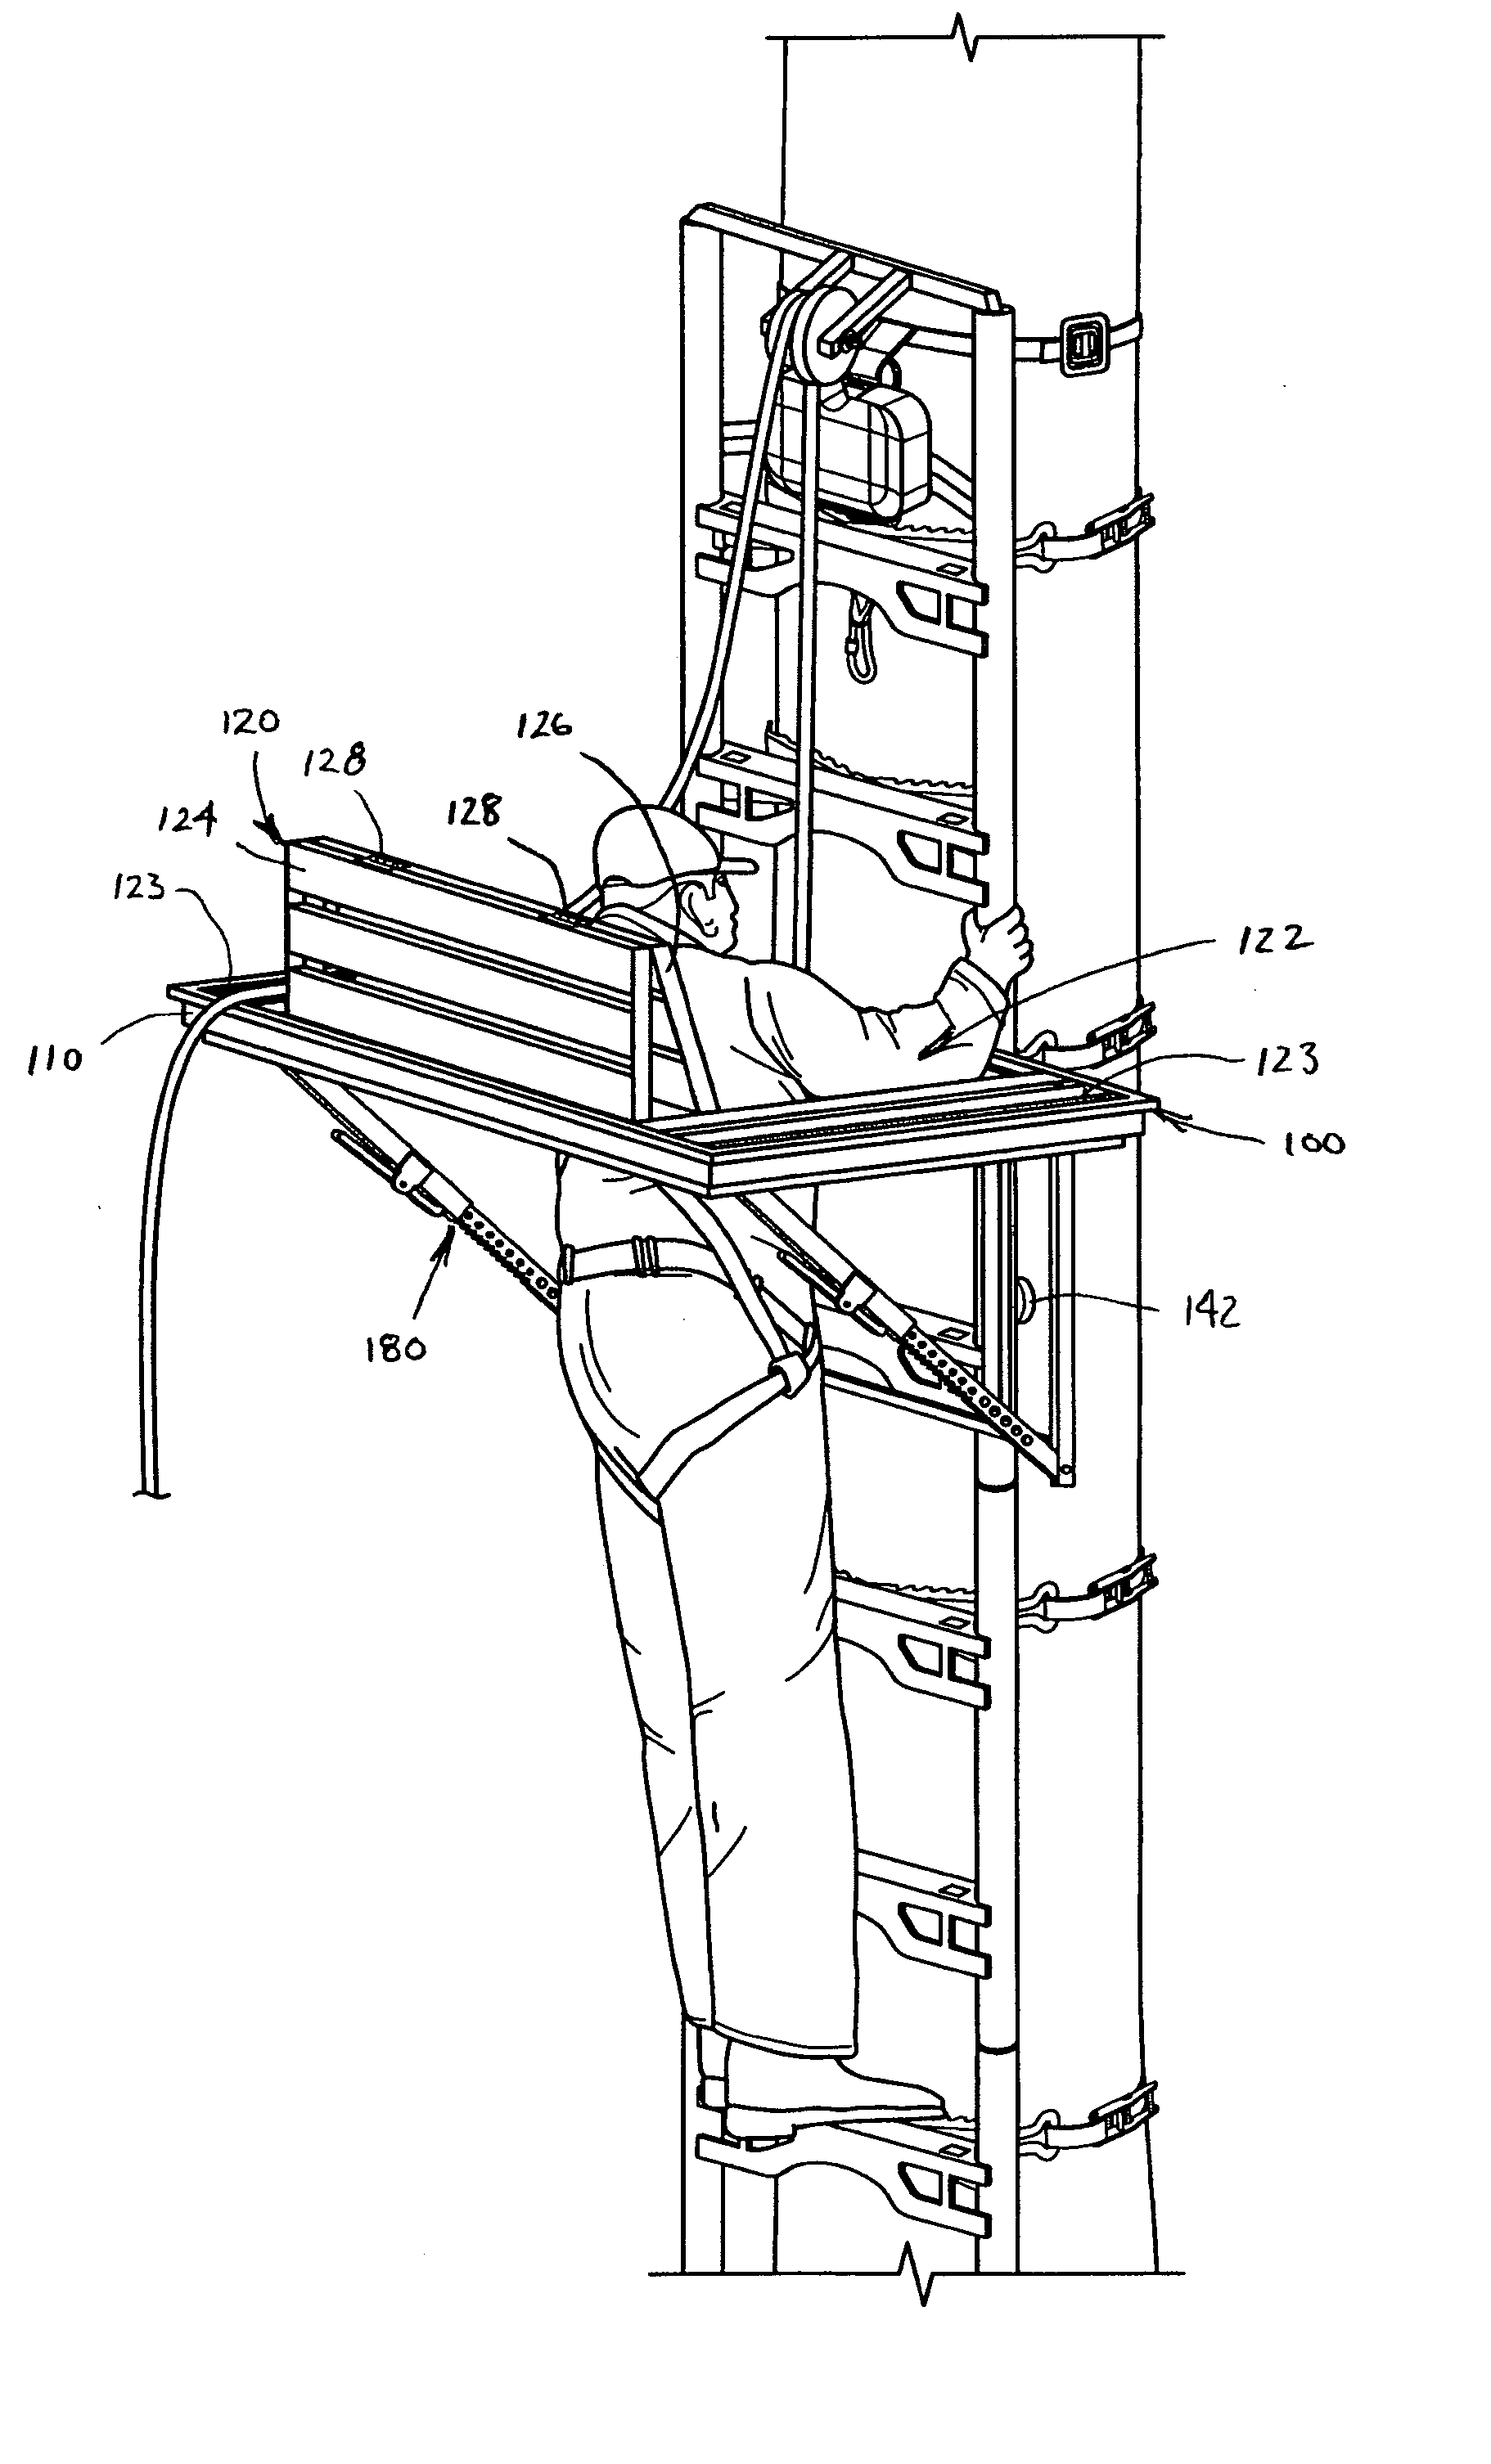 Ladder stand with platform hoist and method of assembling same